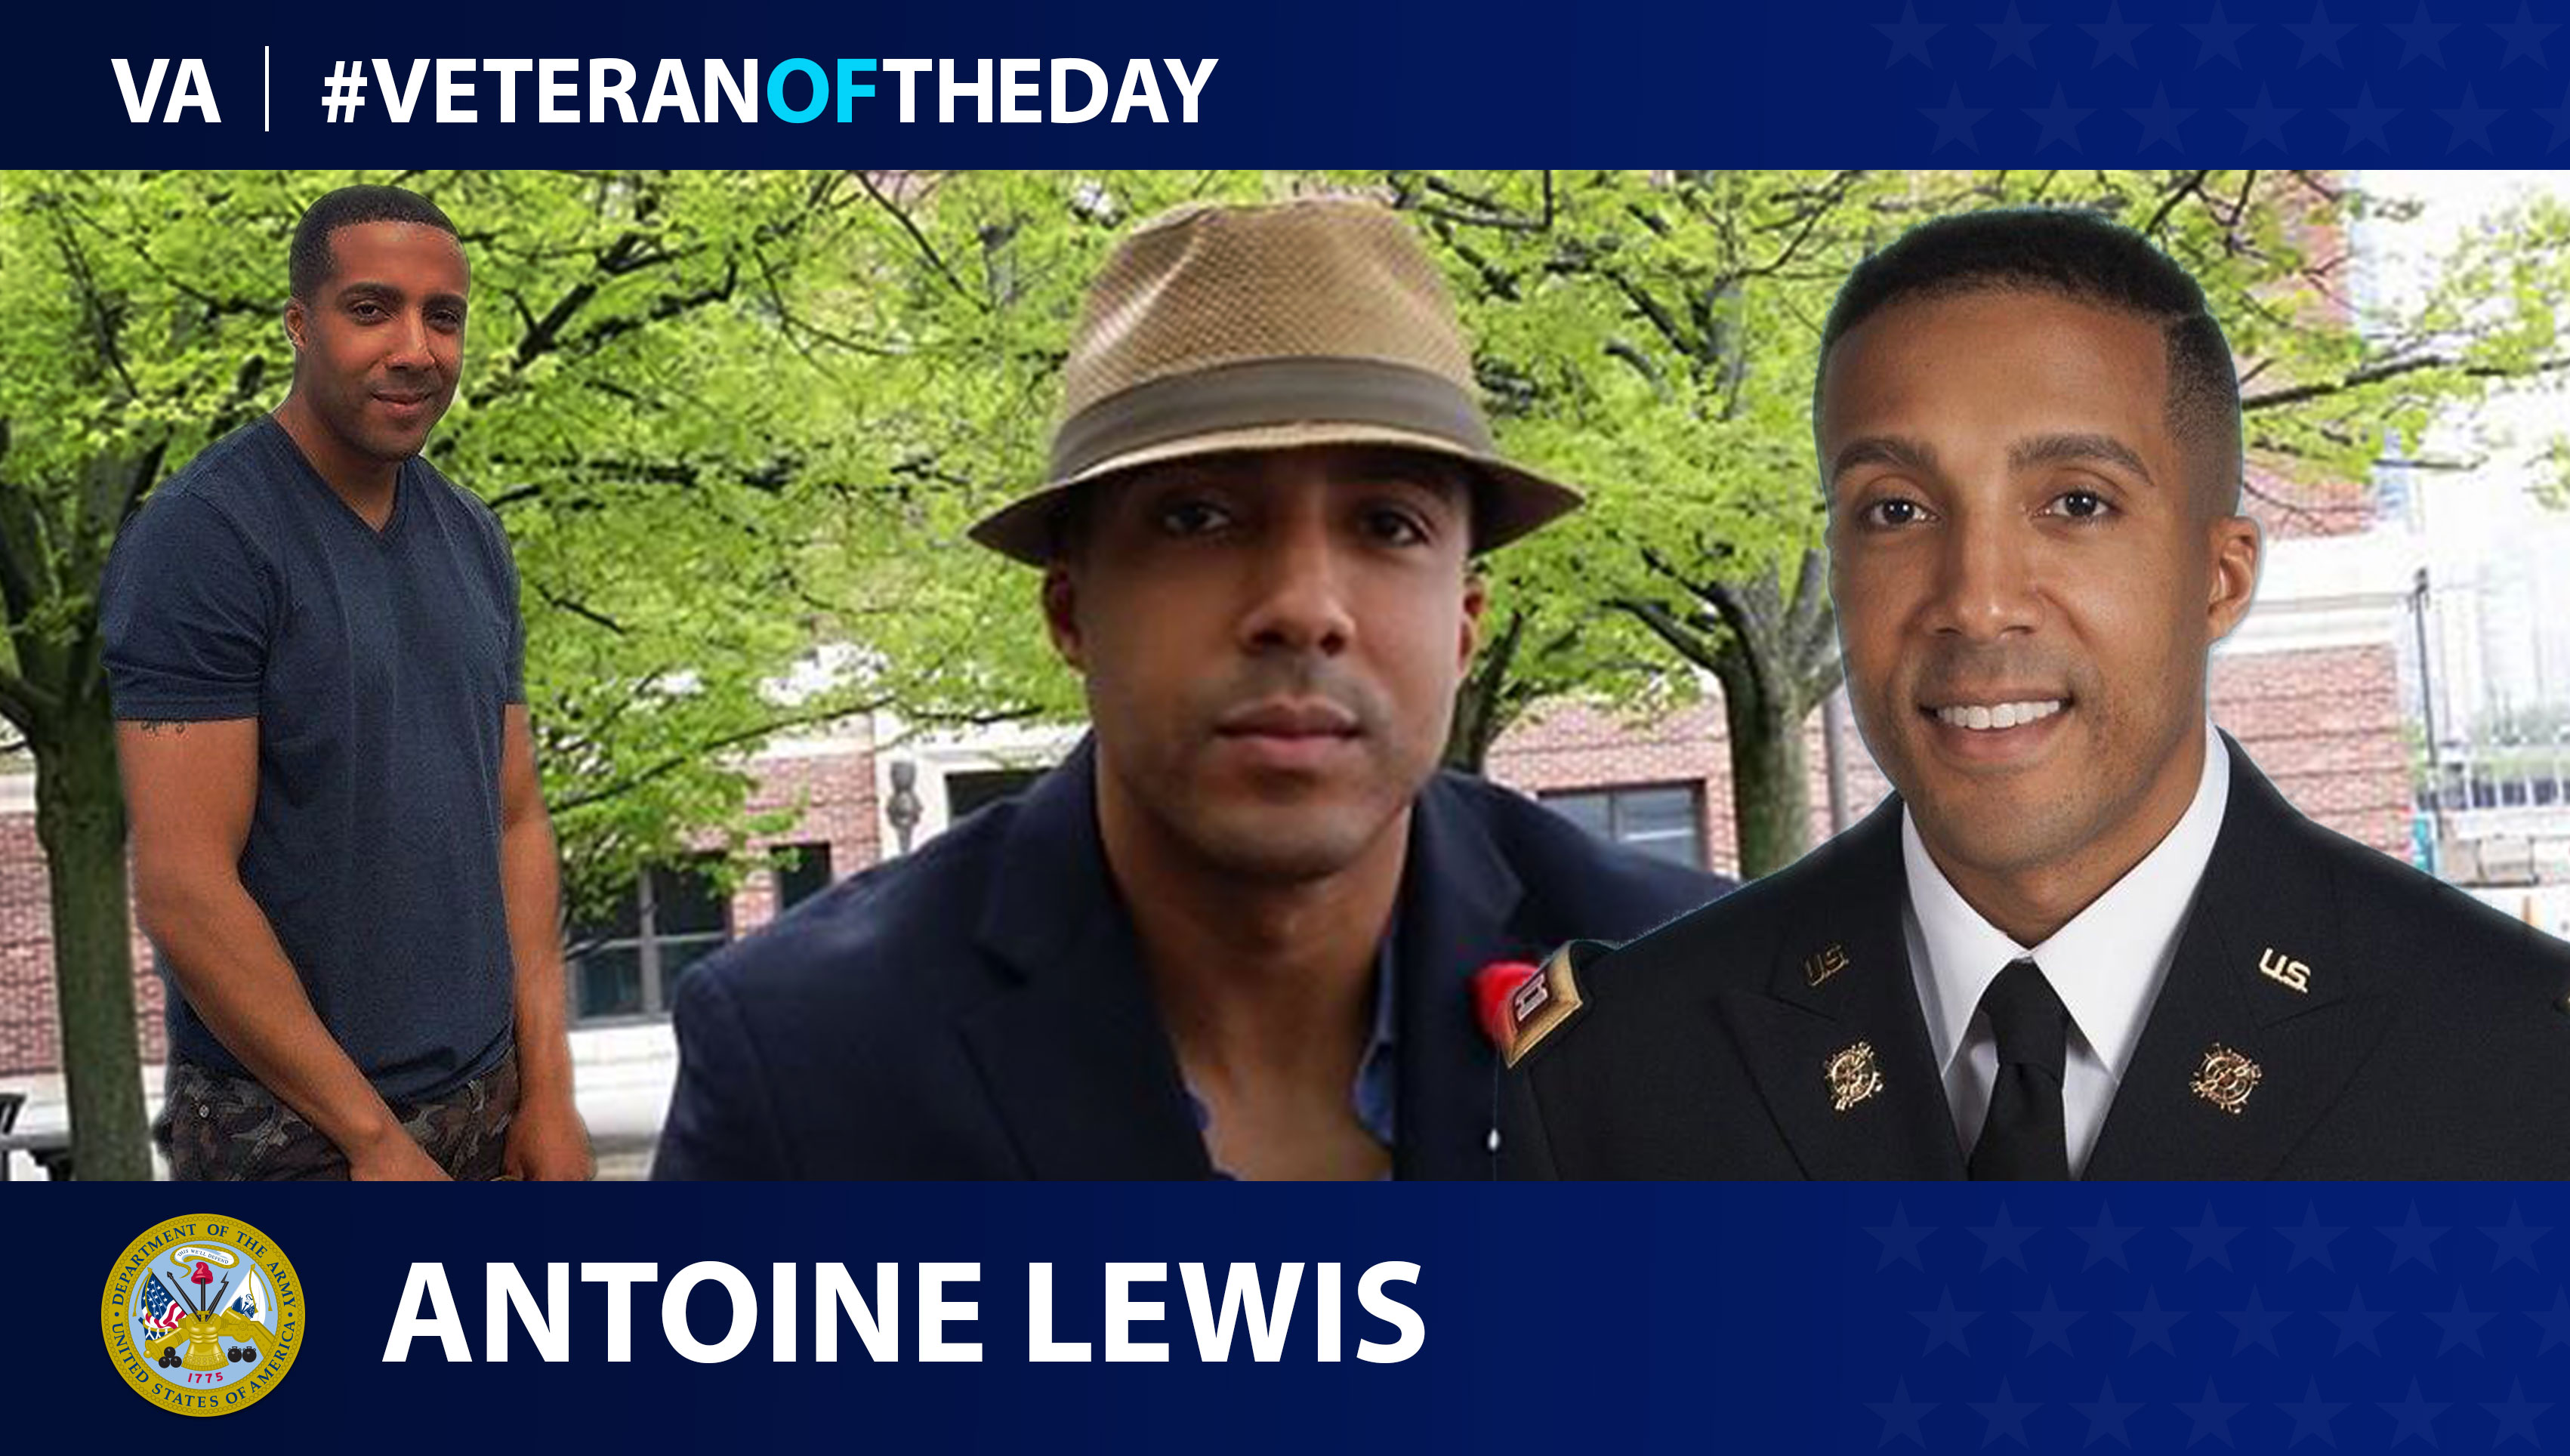 Army Veteran Antoine Lewis is today's Veteran of the Day.